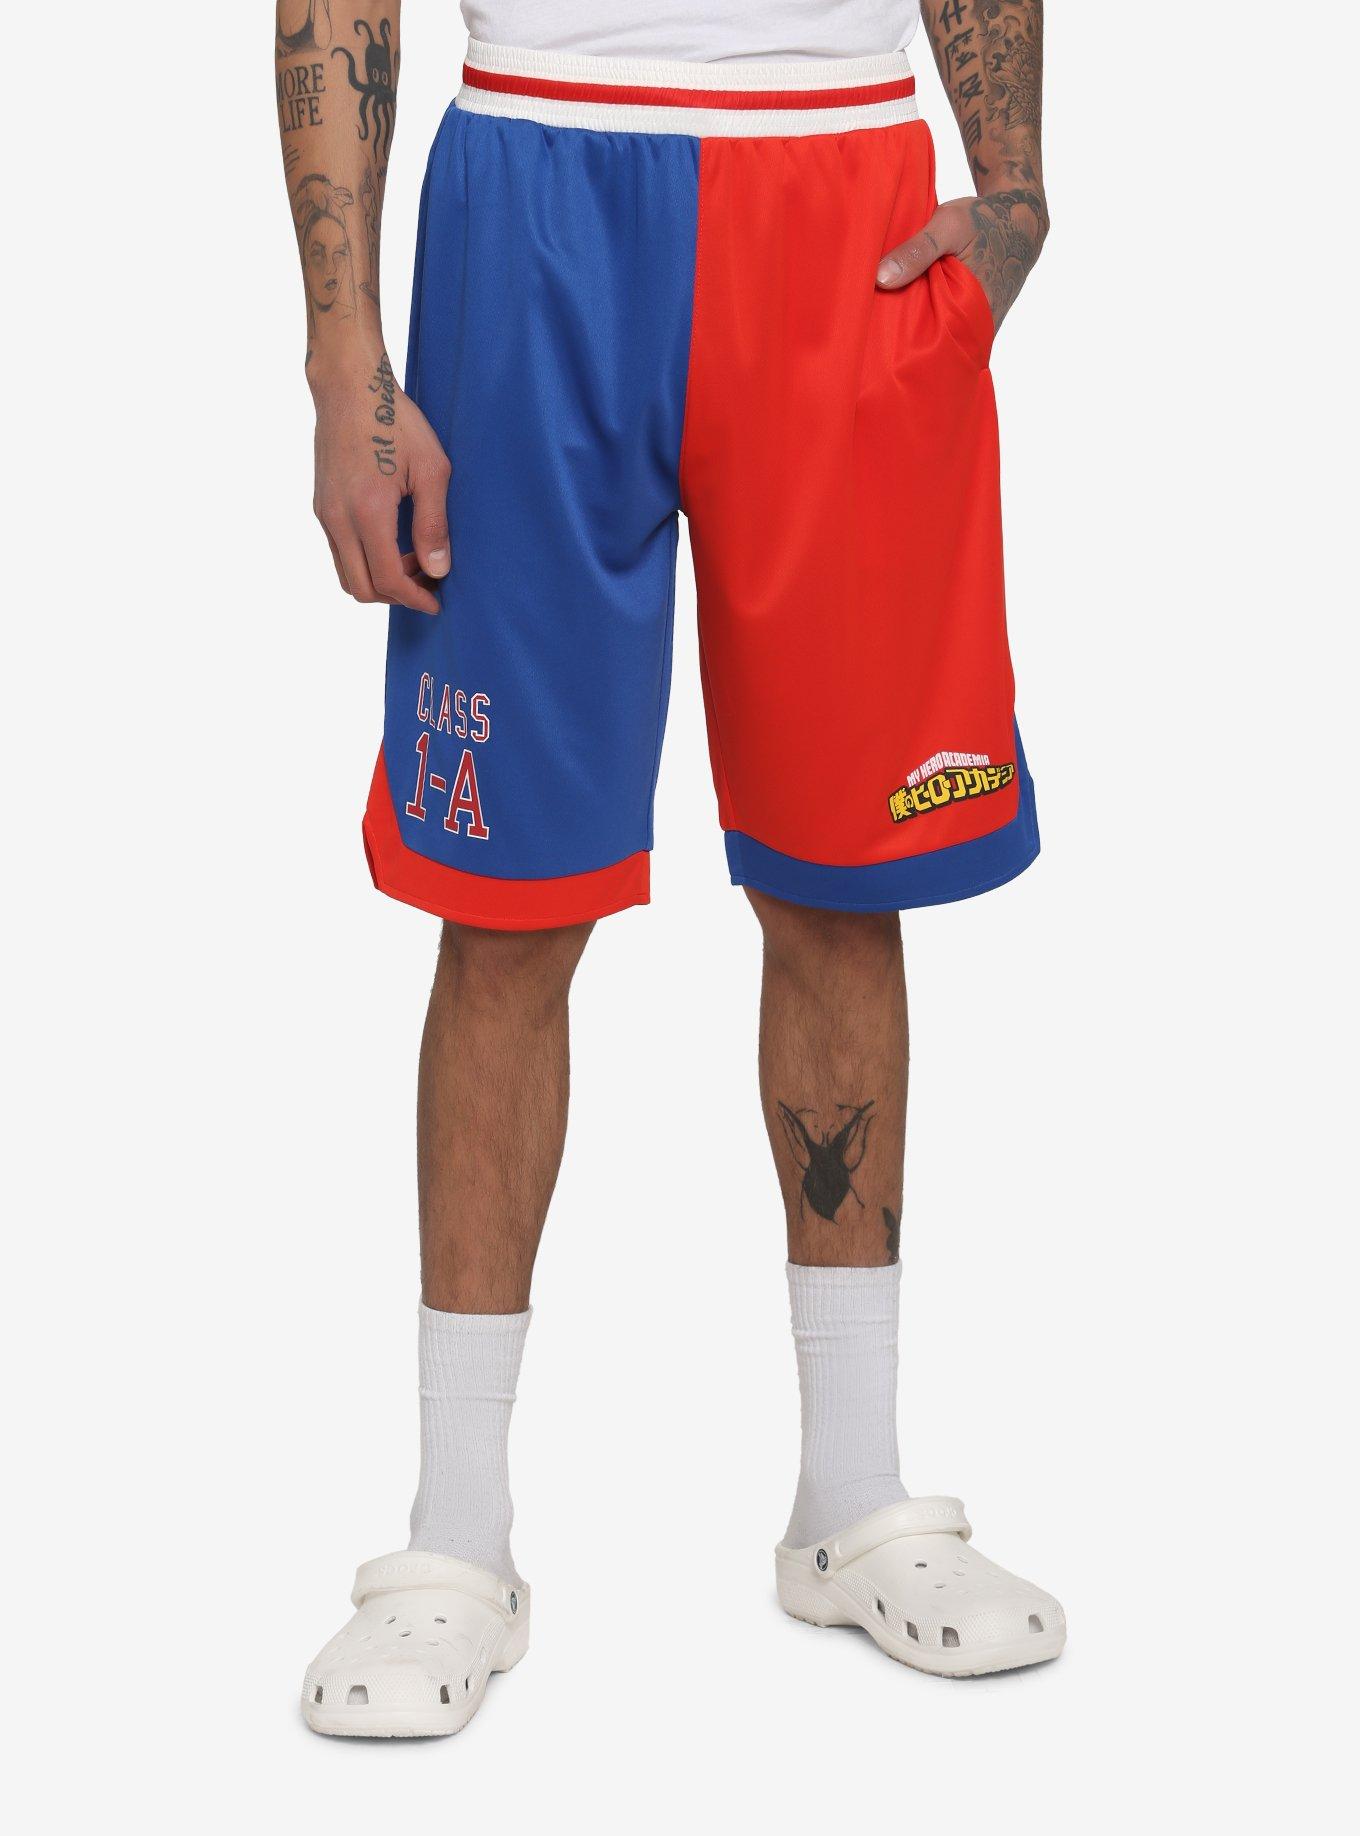 NBA_ Men Basketball Shorts JUST DON Pocket Retro Team Stitched